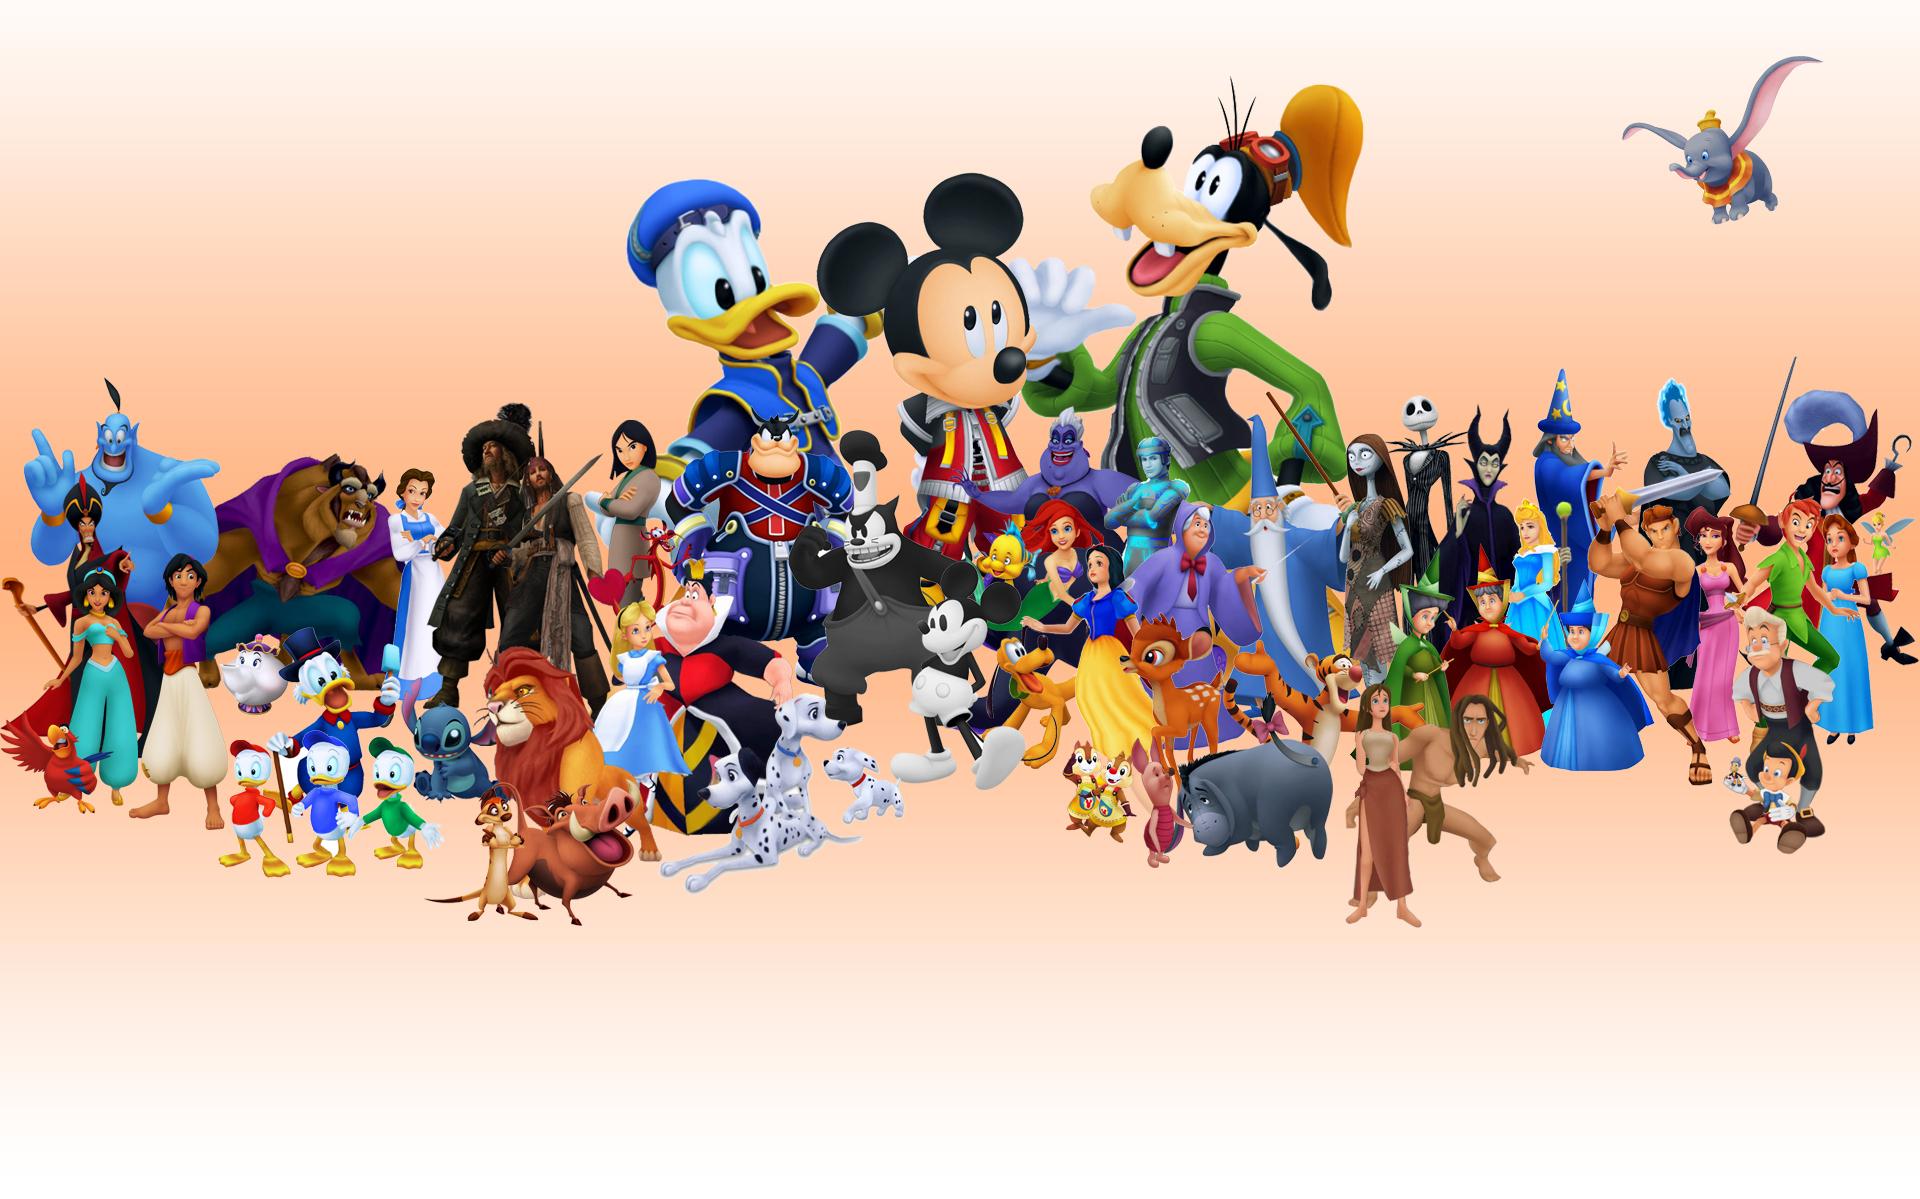 Disney Desktop Background Wallpaper